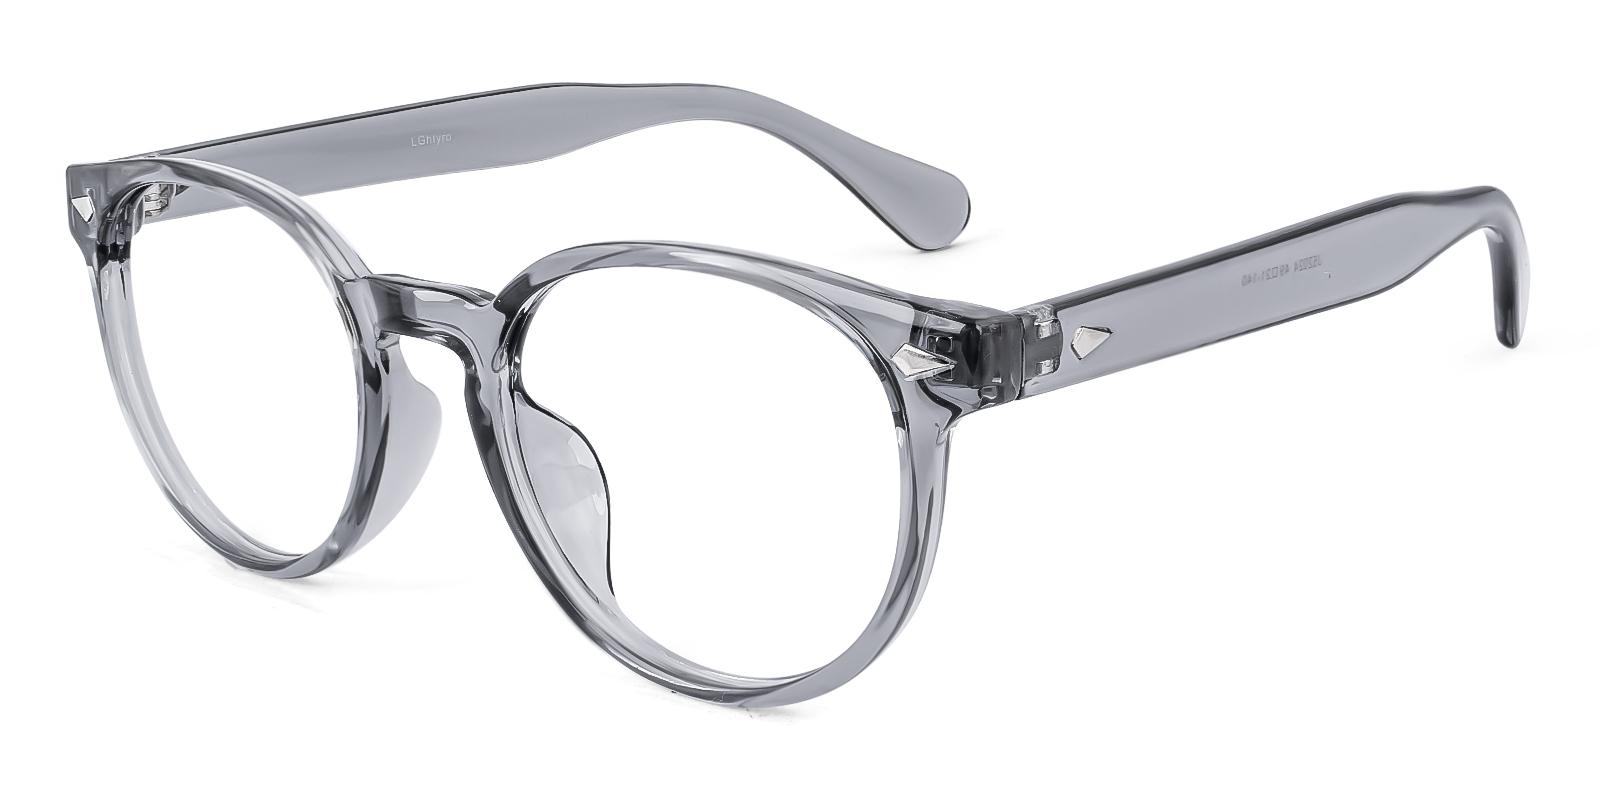 Hismost Gray Plastic Eyeglasses , UniversalBridgeFit Frames from ABBE Glasses